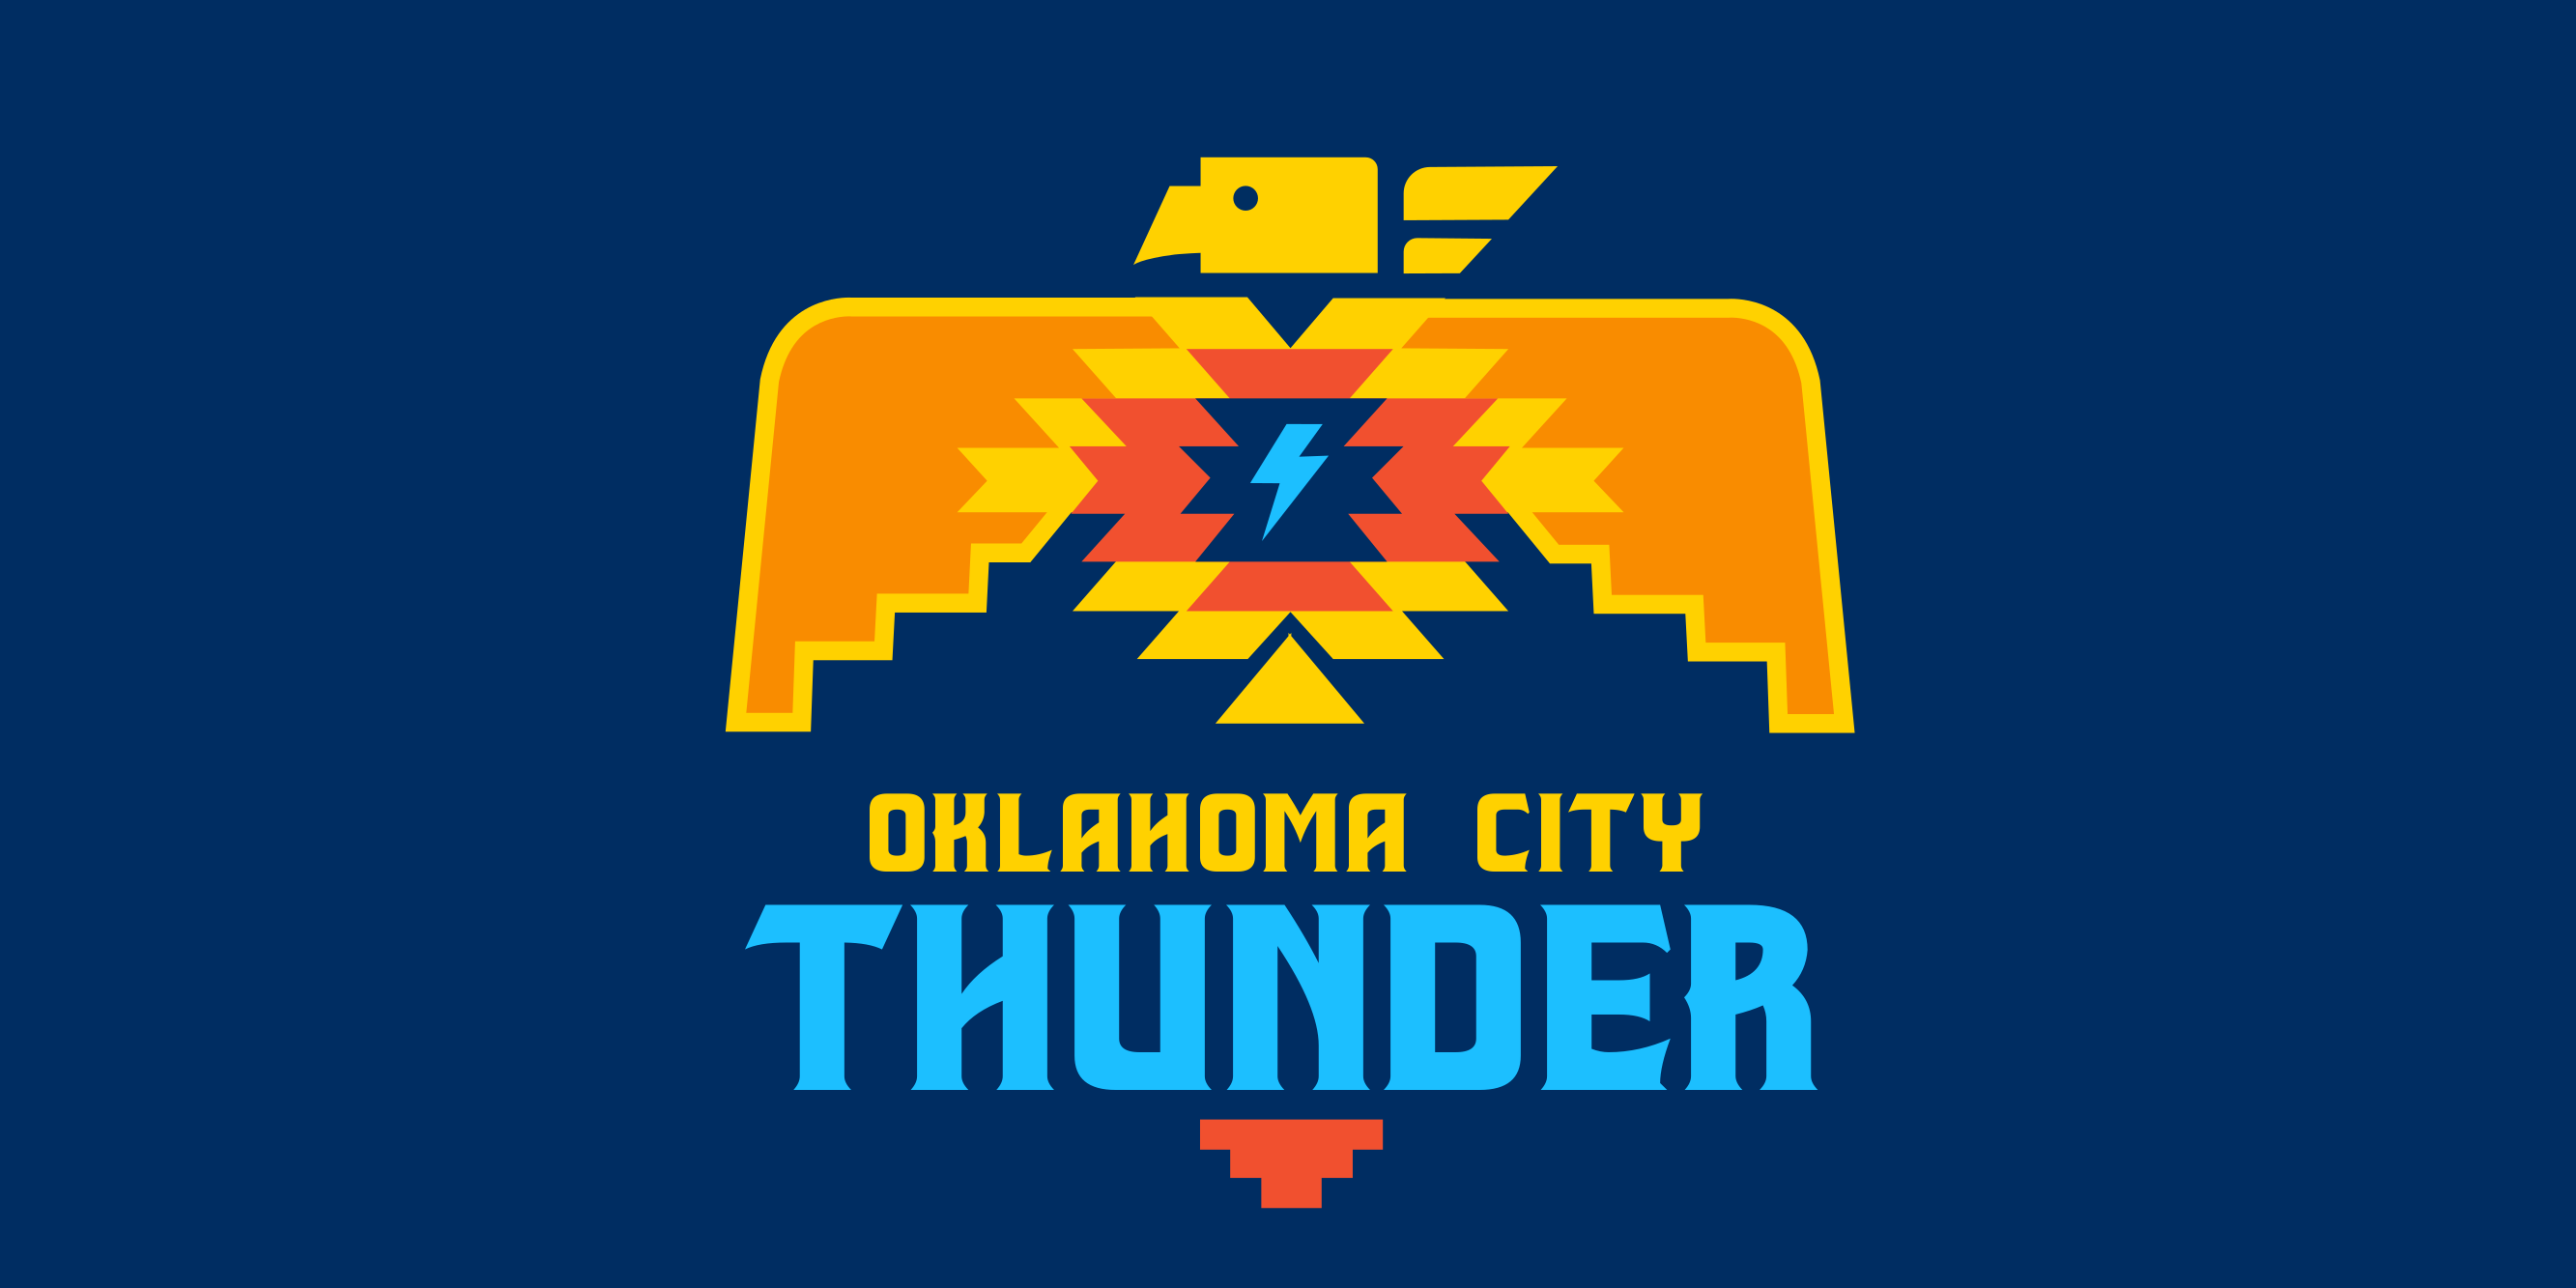 okc thunder logo png